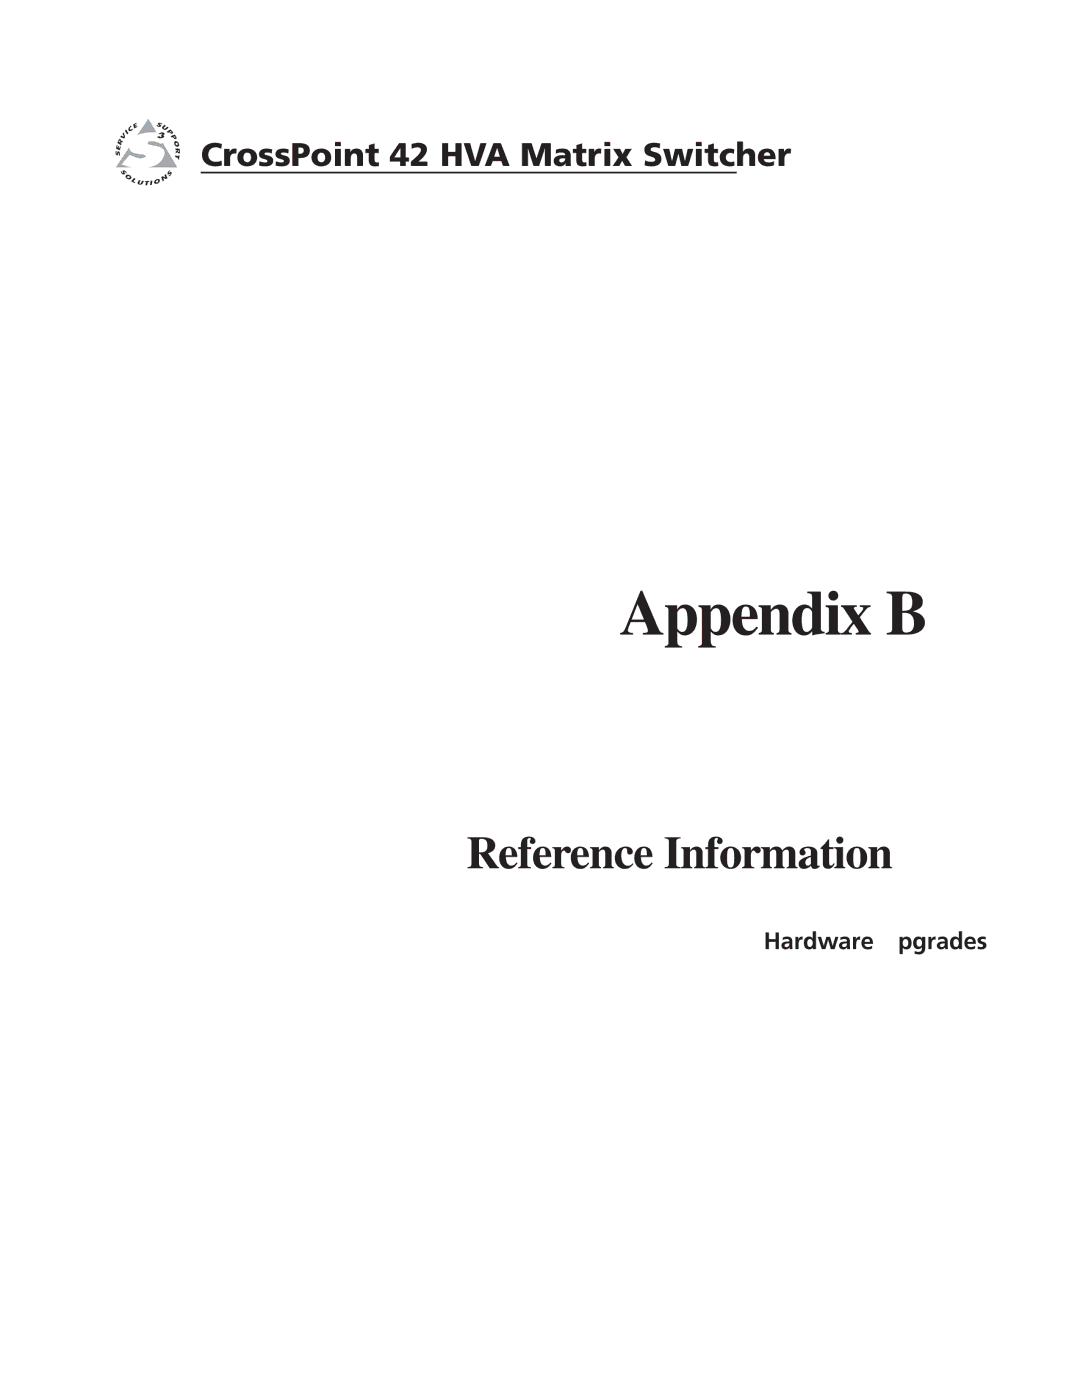 Extron electronic 42 HVA manual AppendixBB, Reference Information 